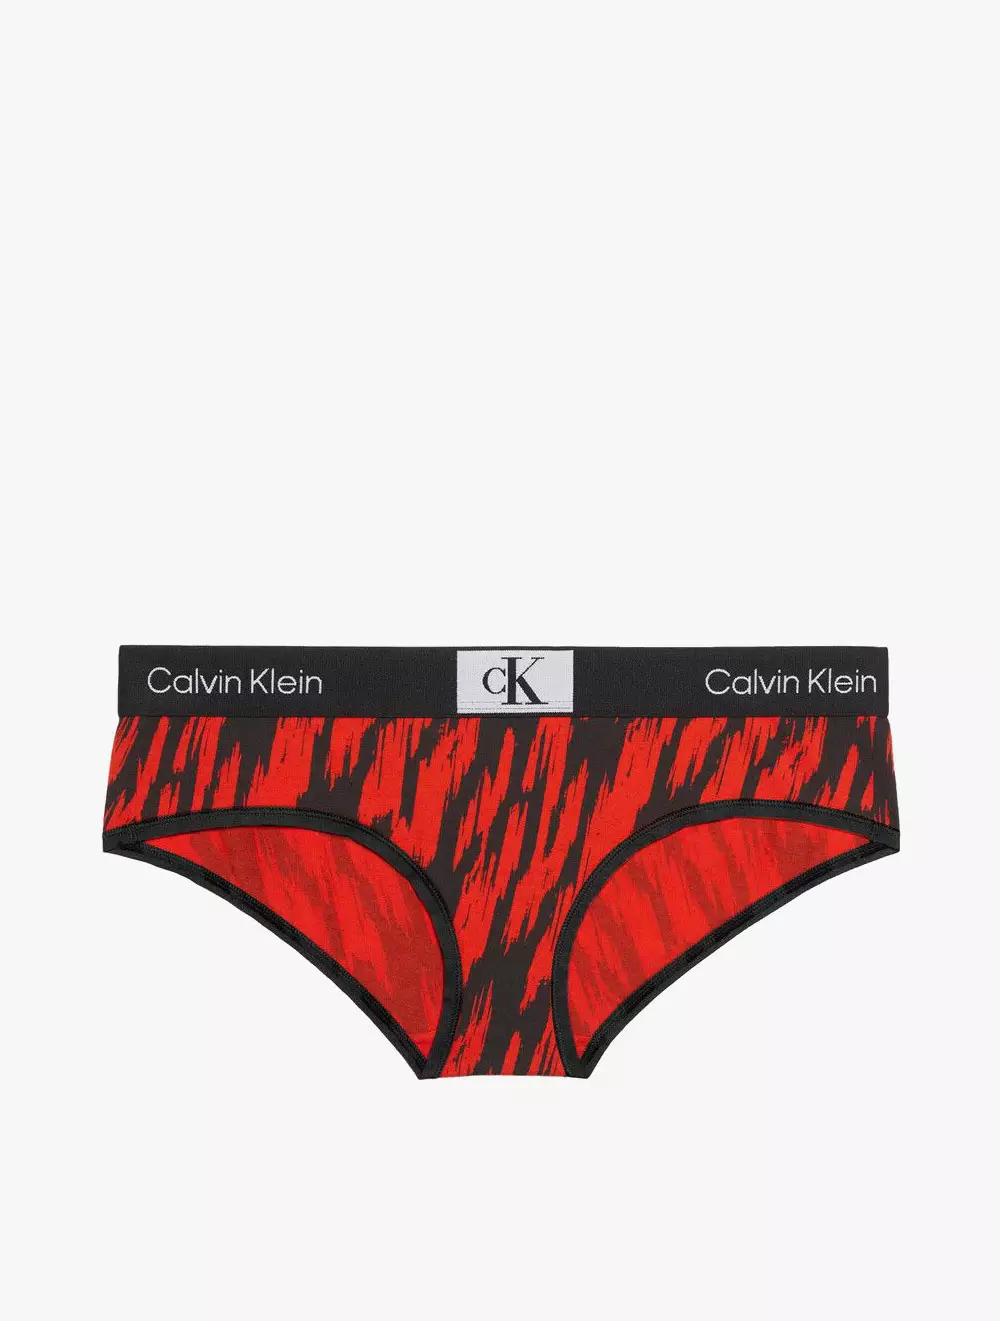 Calvin Klein 1996 Logo Lace Bikini in Black